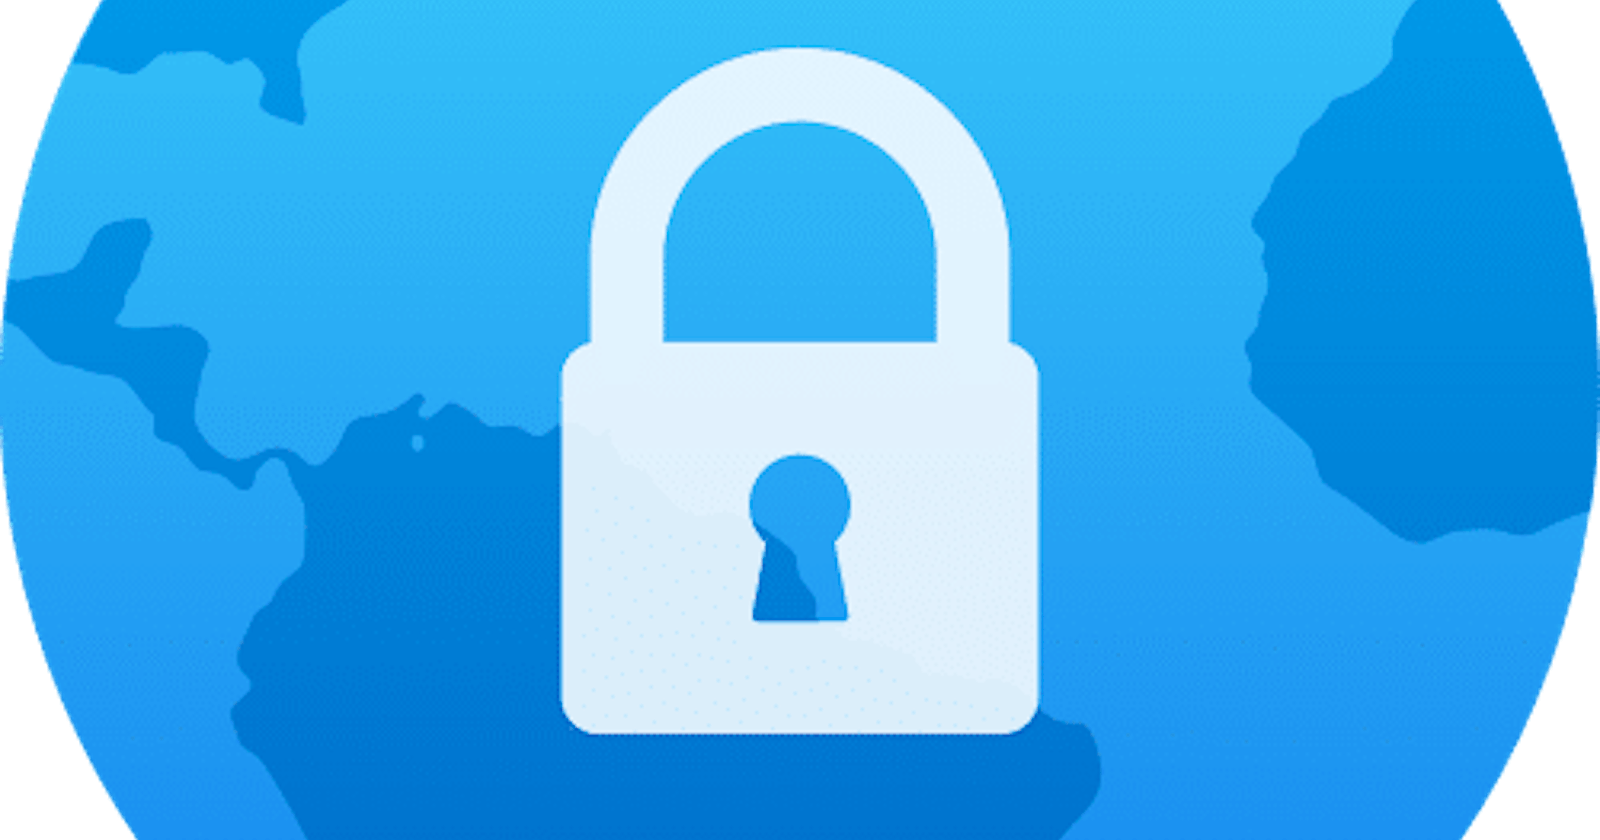 Let's Encrypt with SSL Certificates